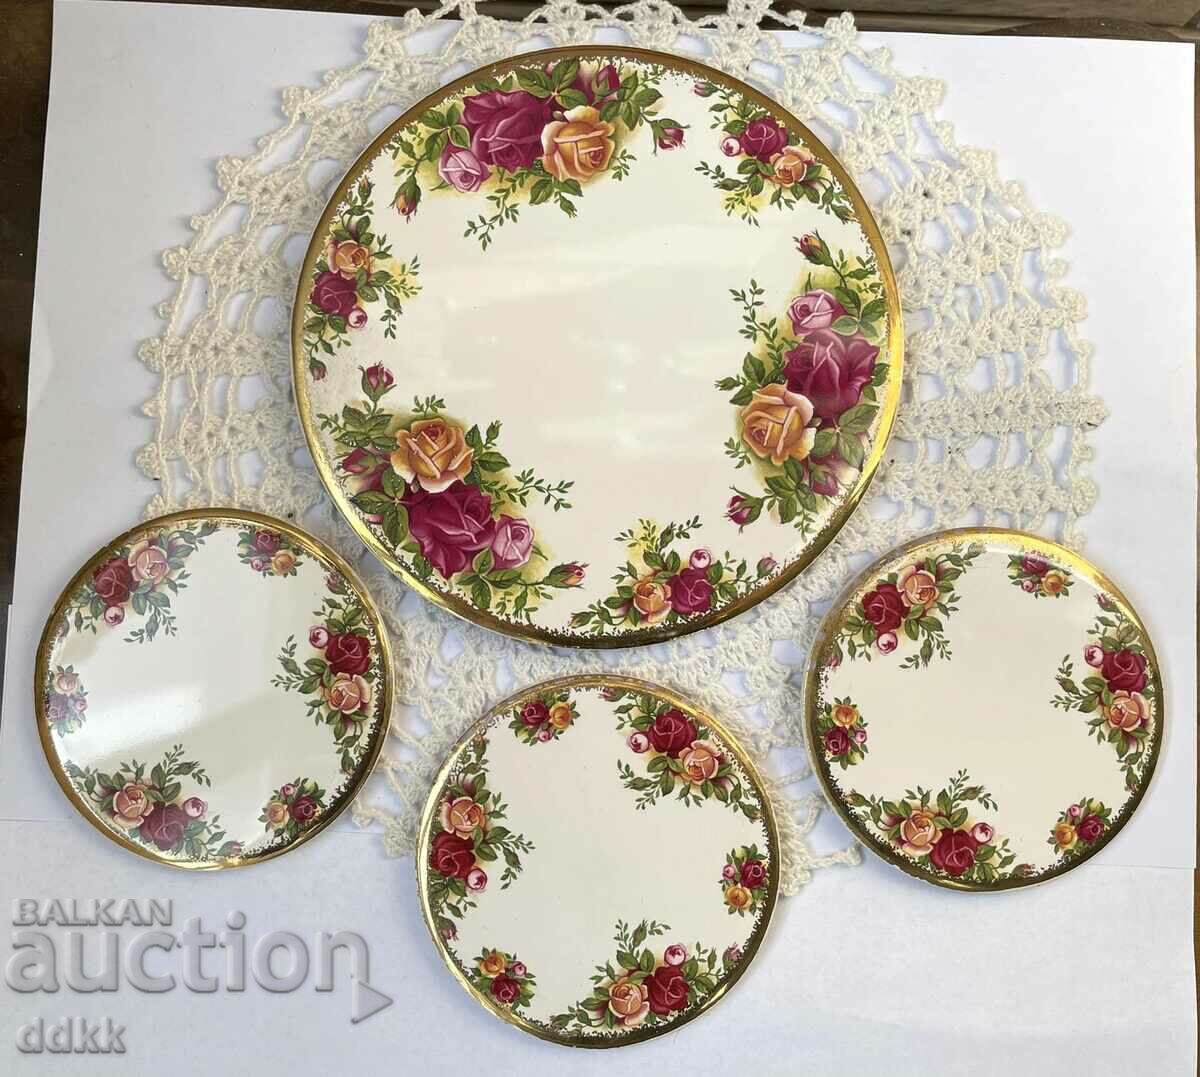 ROYAL ALBERT beautiful porcelain coasters with gold edging